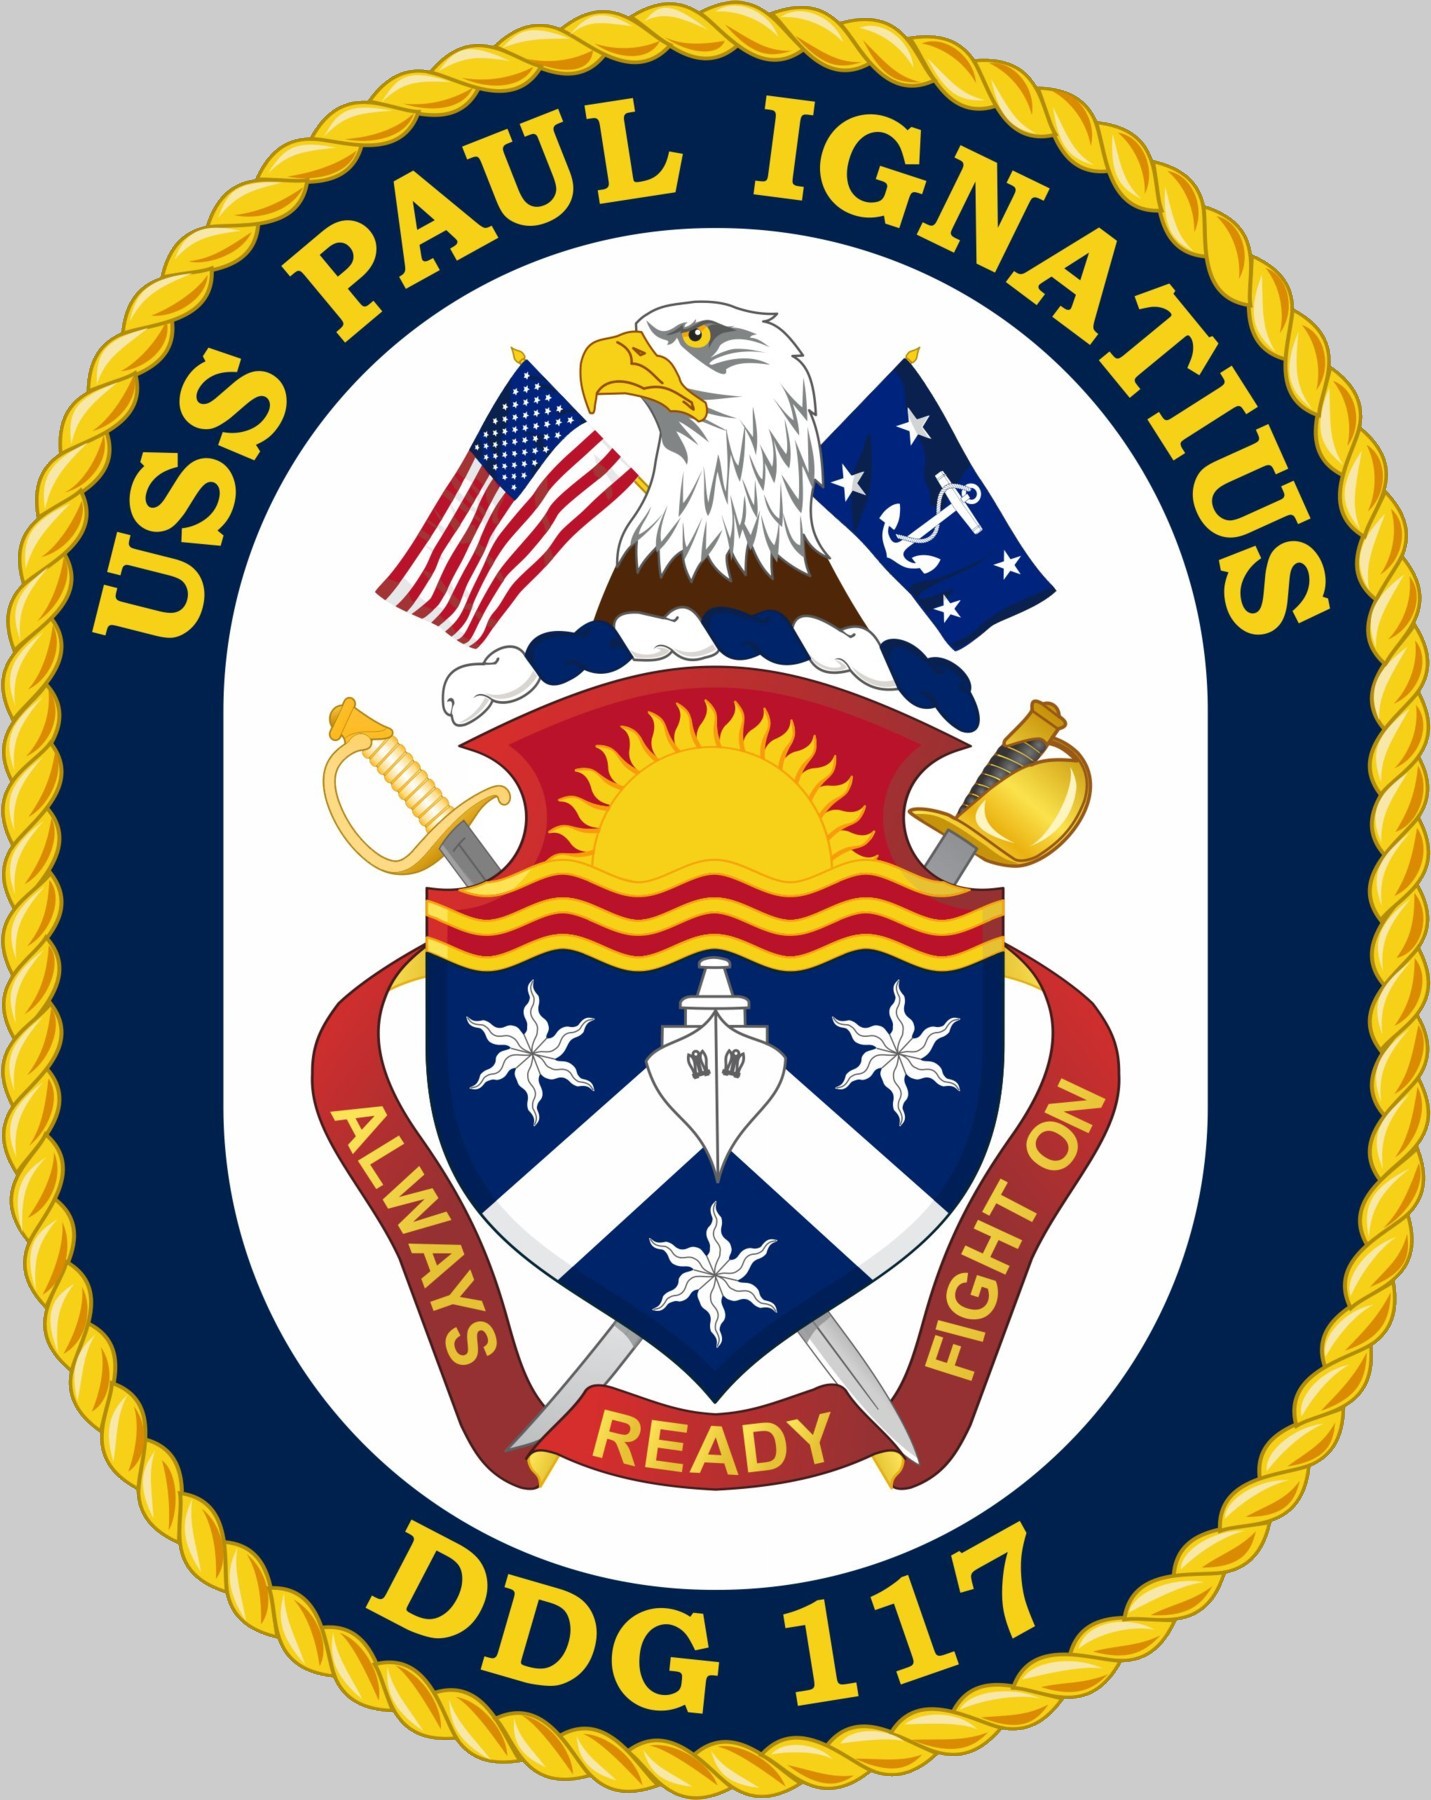 ddg-117 uss paul ignatius insignia crest patch badge arleigh burke class guided missile destroyer us navy aegis 02c